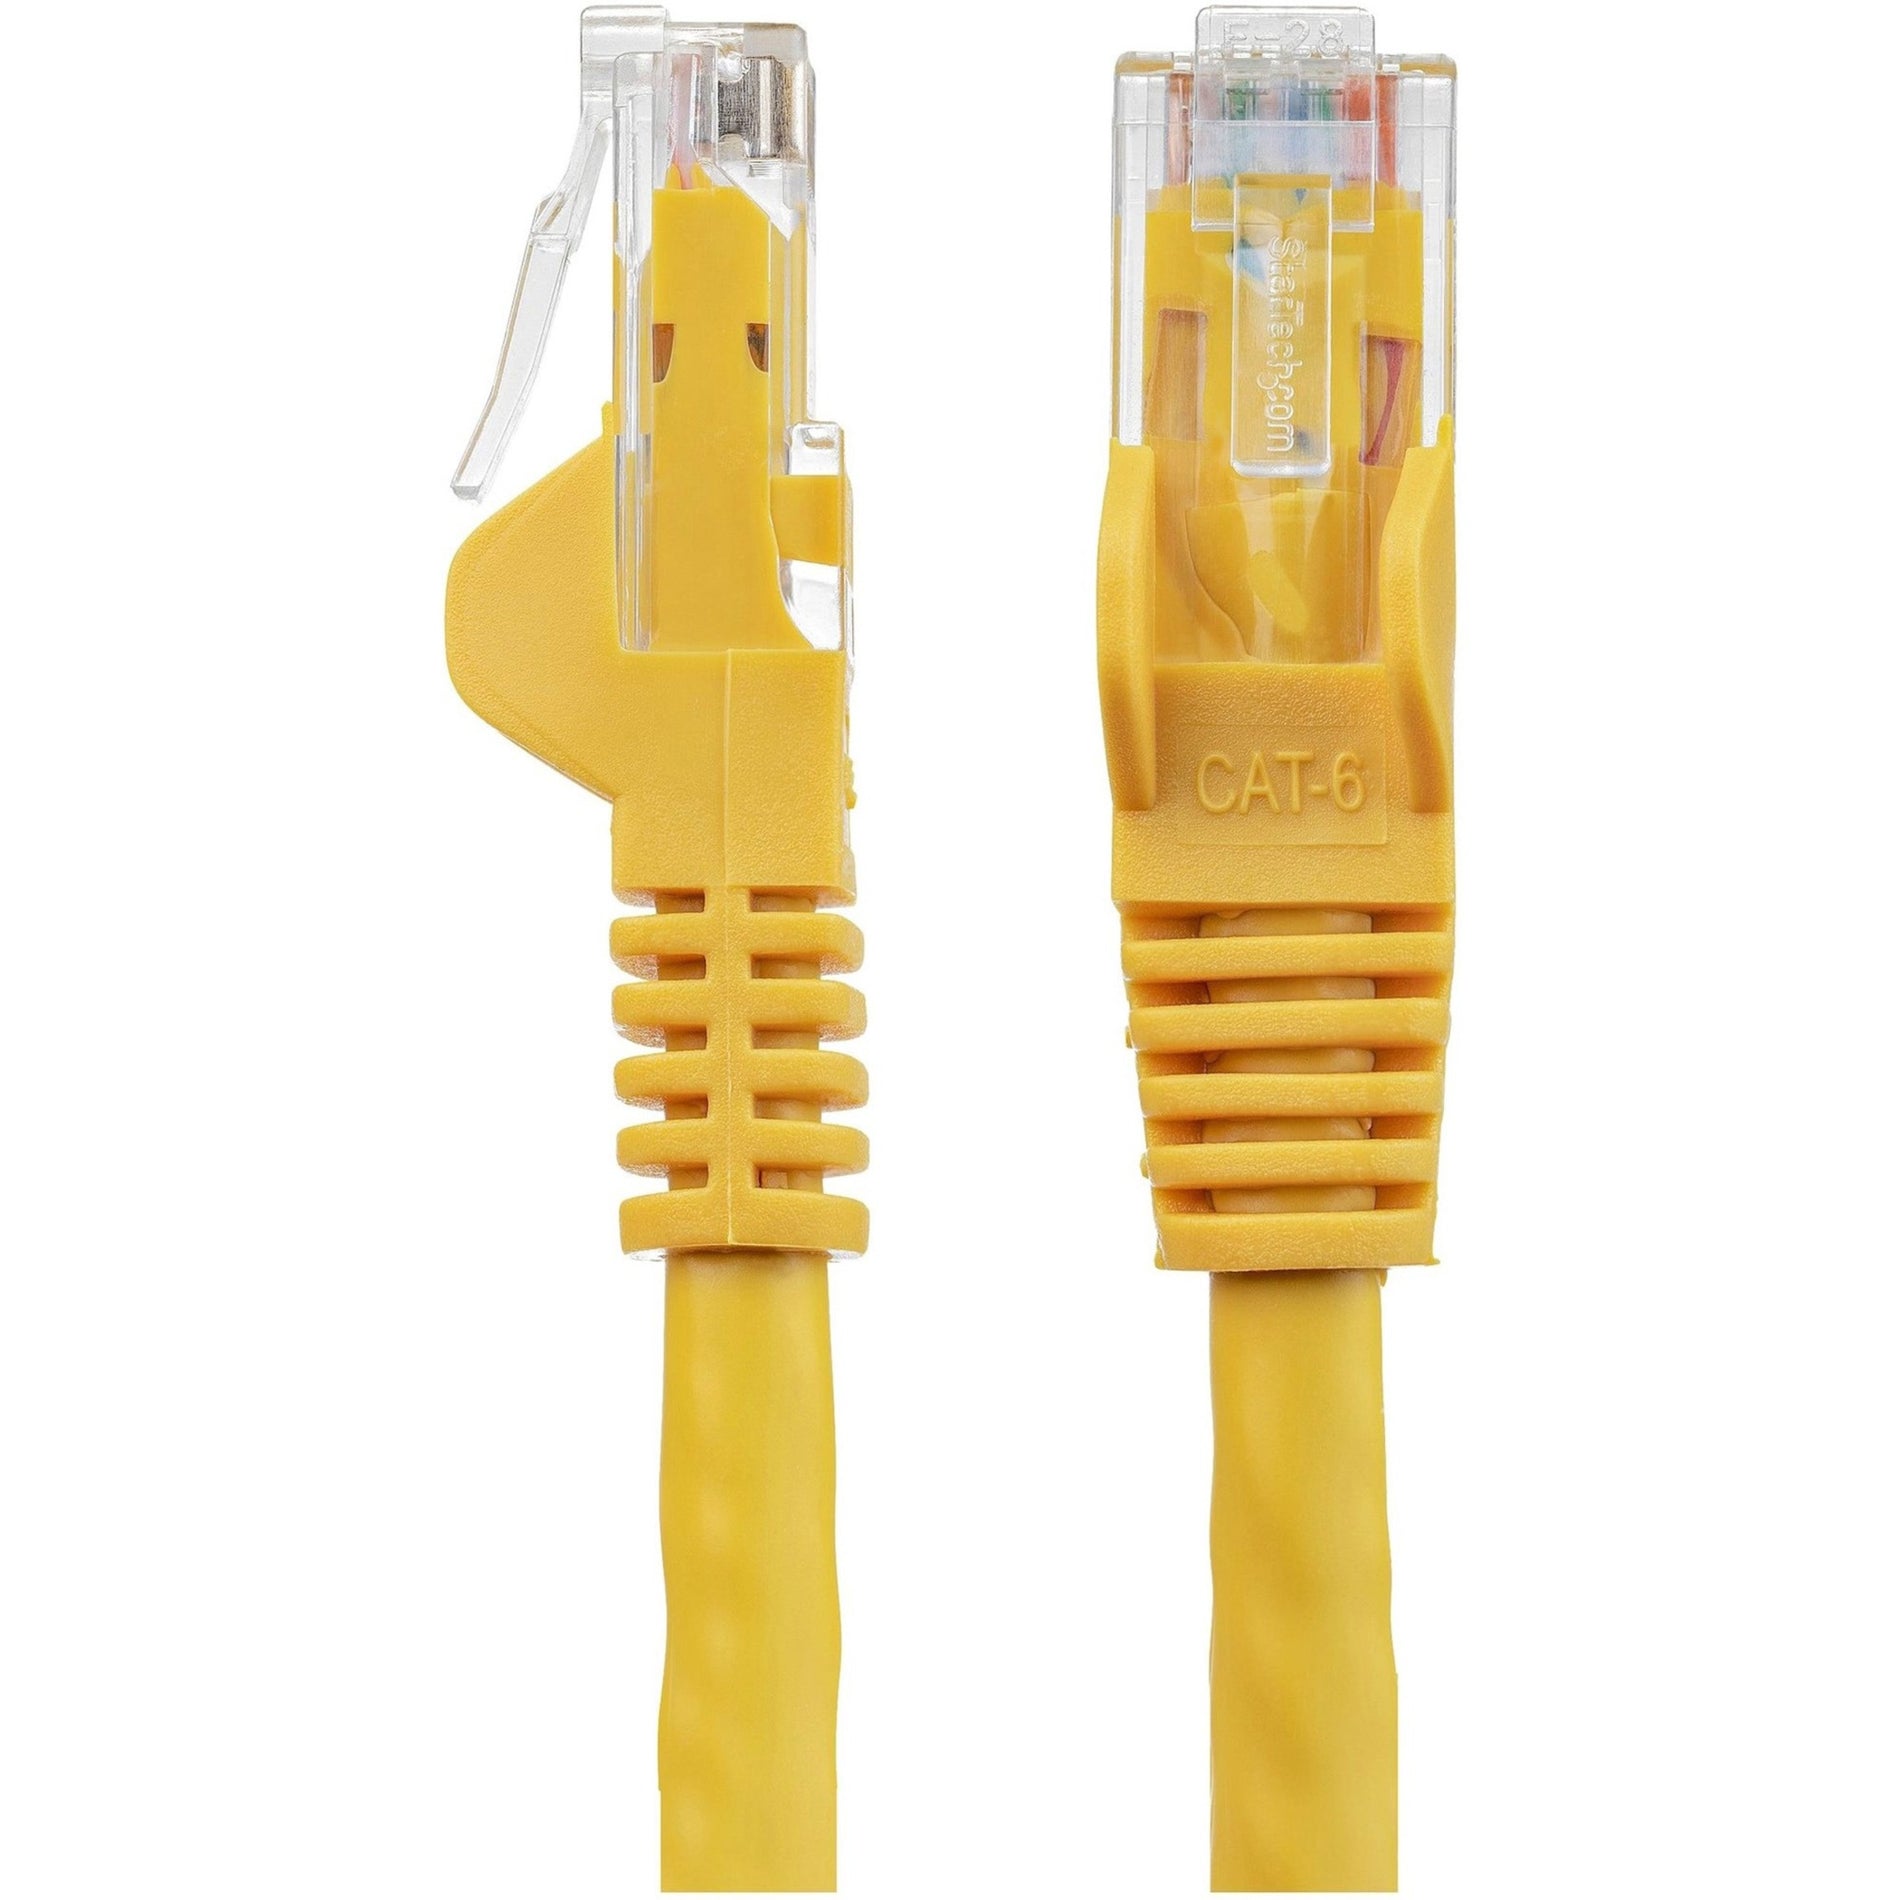 StarTech.com N6PATCH4YL Cable de conexión Cat6 Cable Ethernet amarillo de 4 pies Conectores RJ45 sin enganches